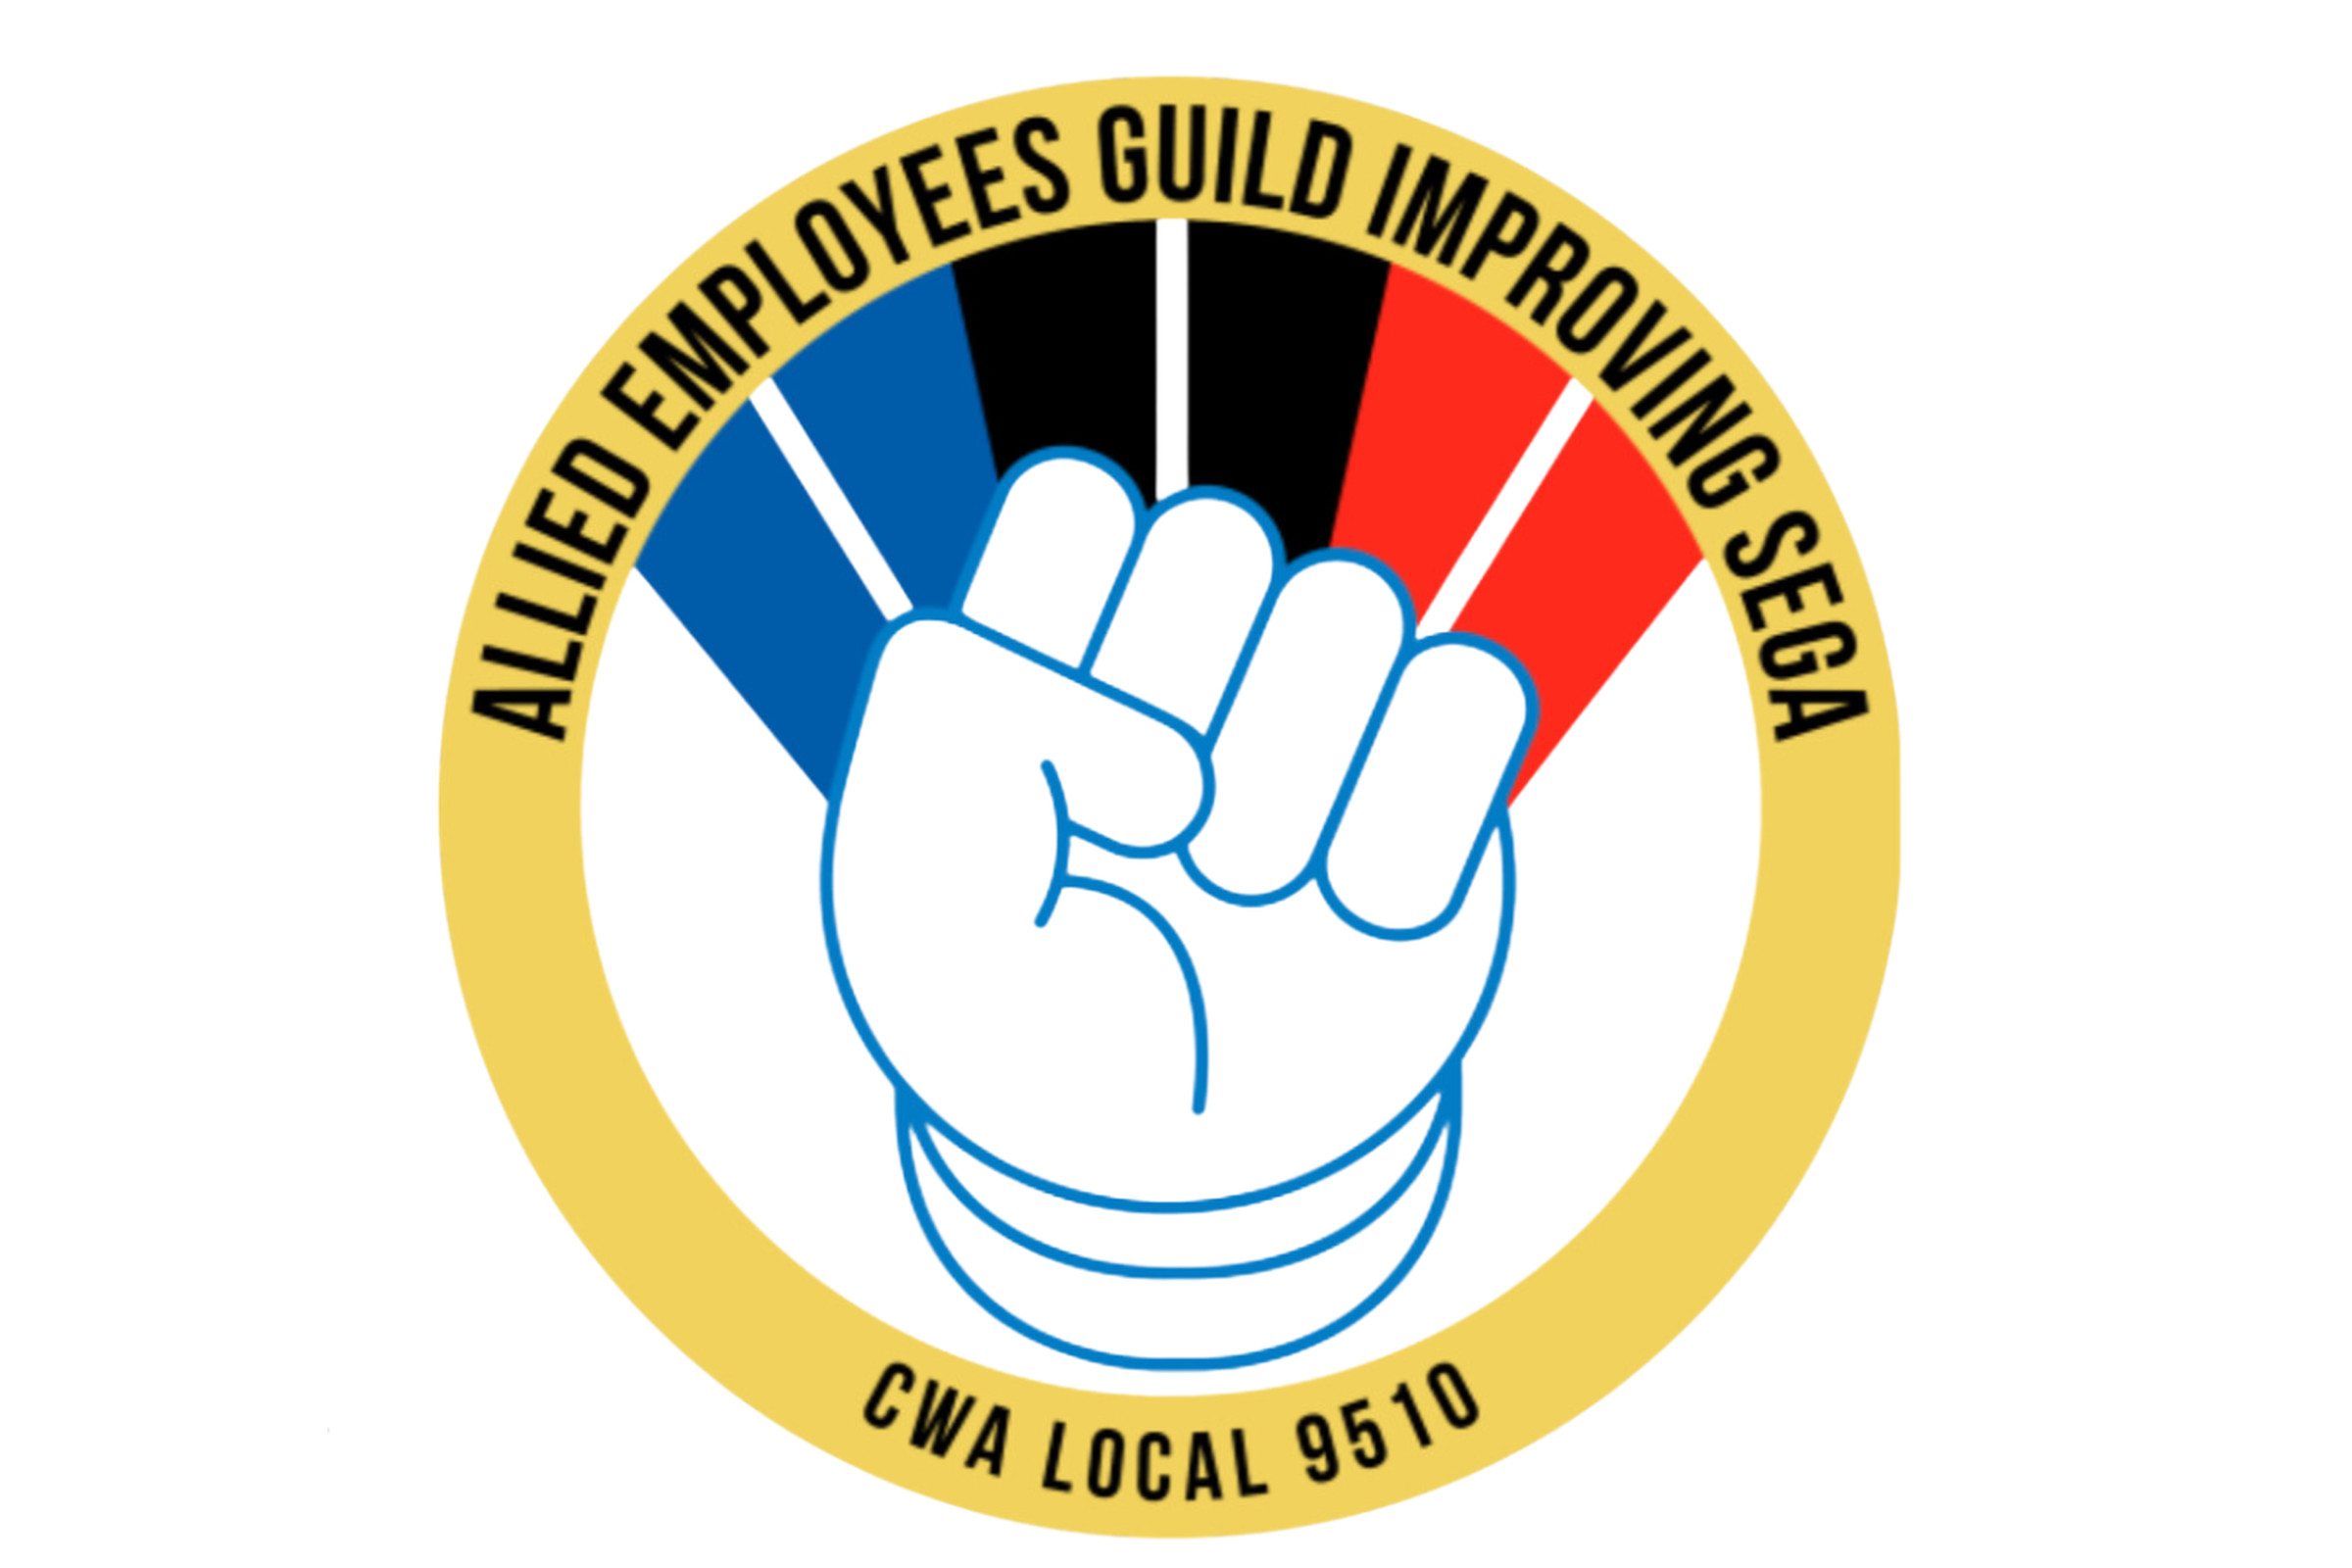 The logo for the Allied Employees Guild Improving Sega, or AEGIS, union